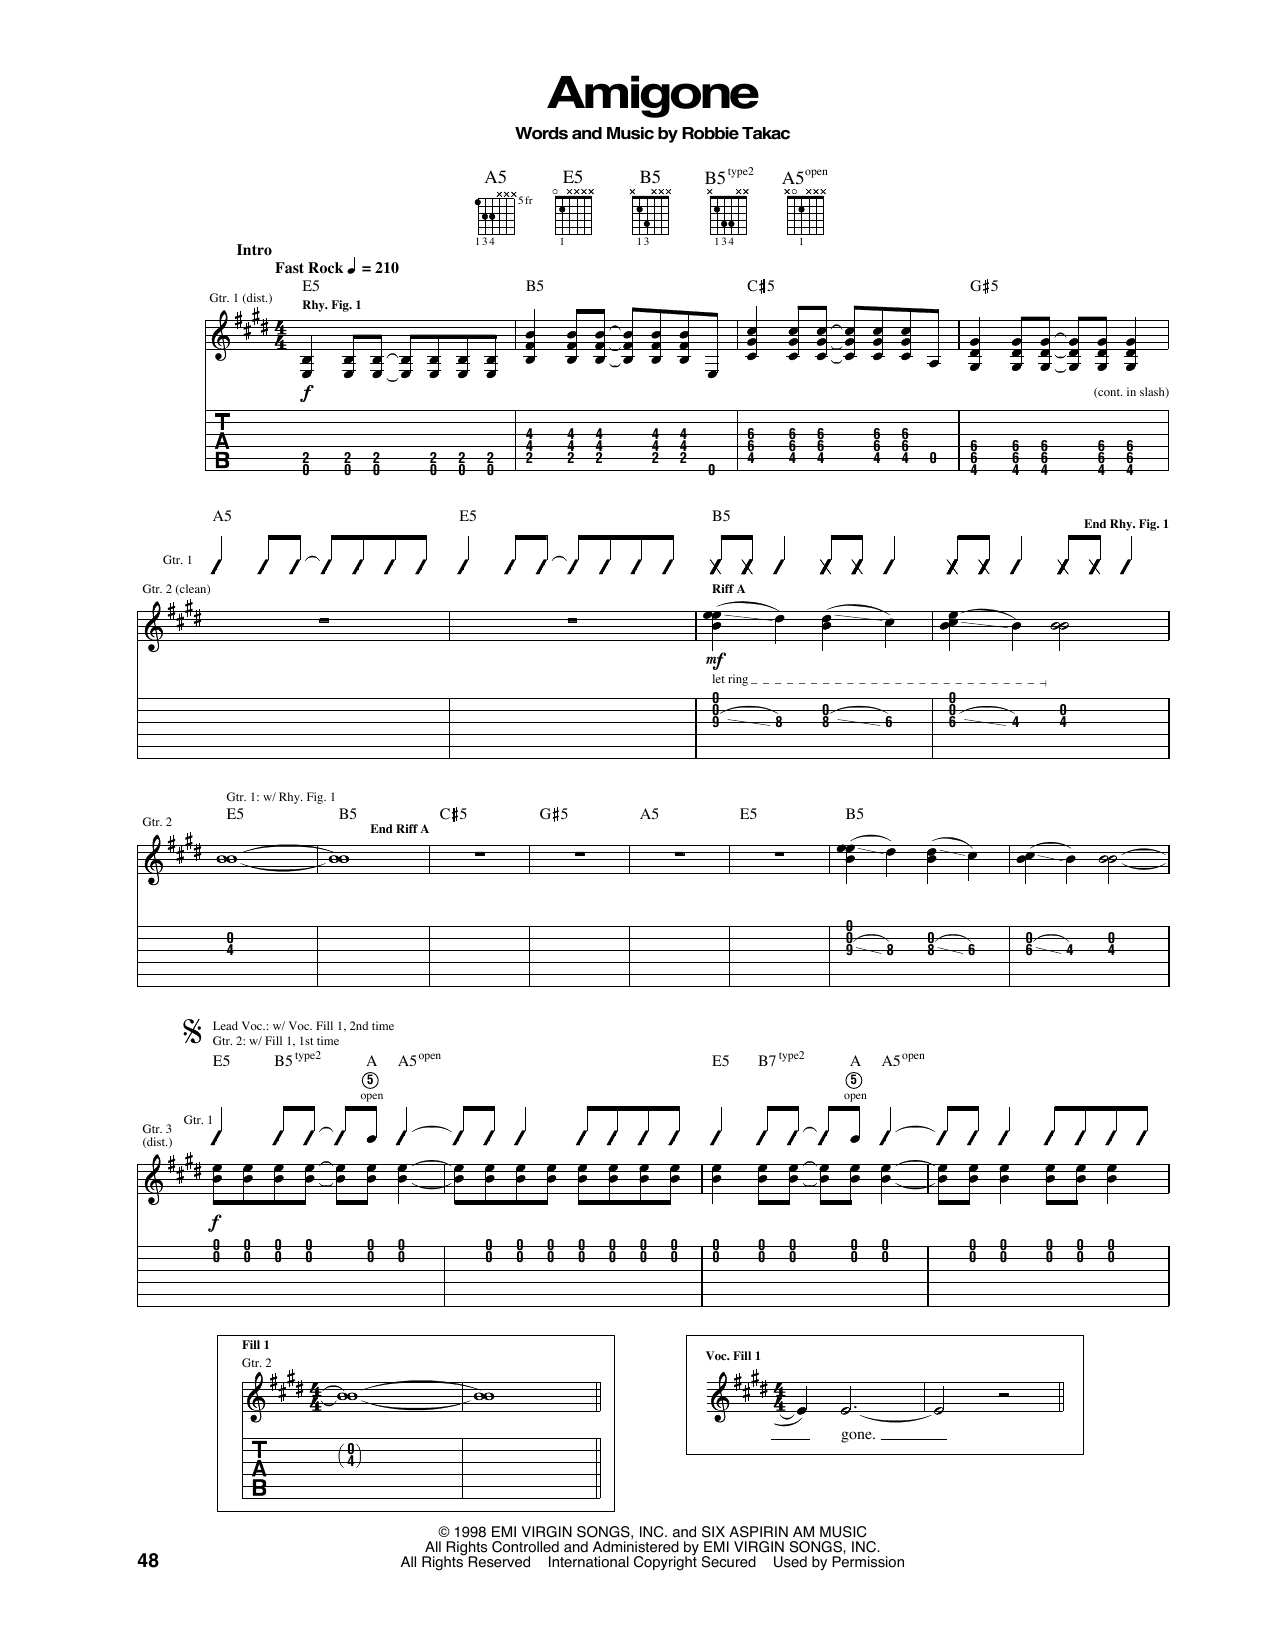 The Goo Goo Dolls Amigone Sheet Music Notes & Chords for Guitar Tab - Download or Print PDF